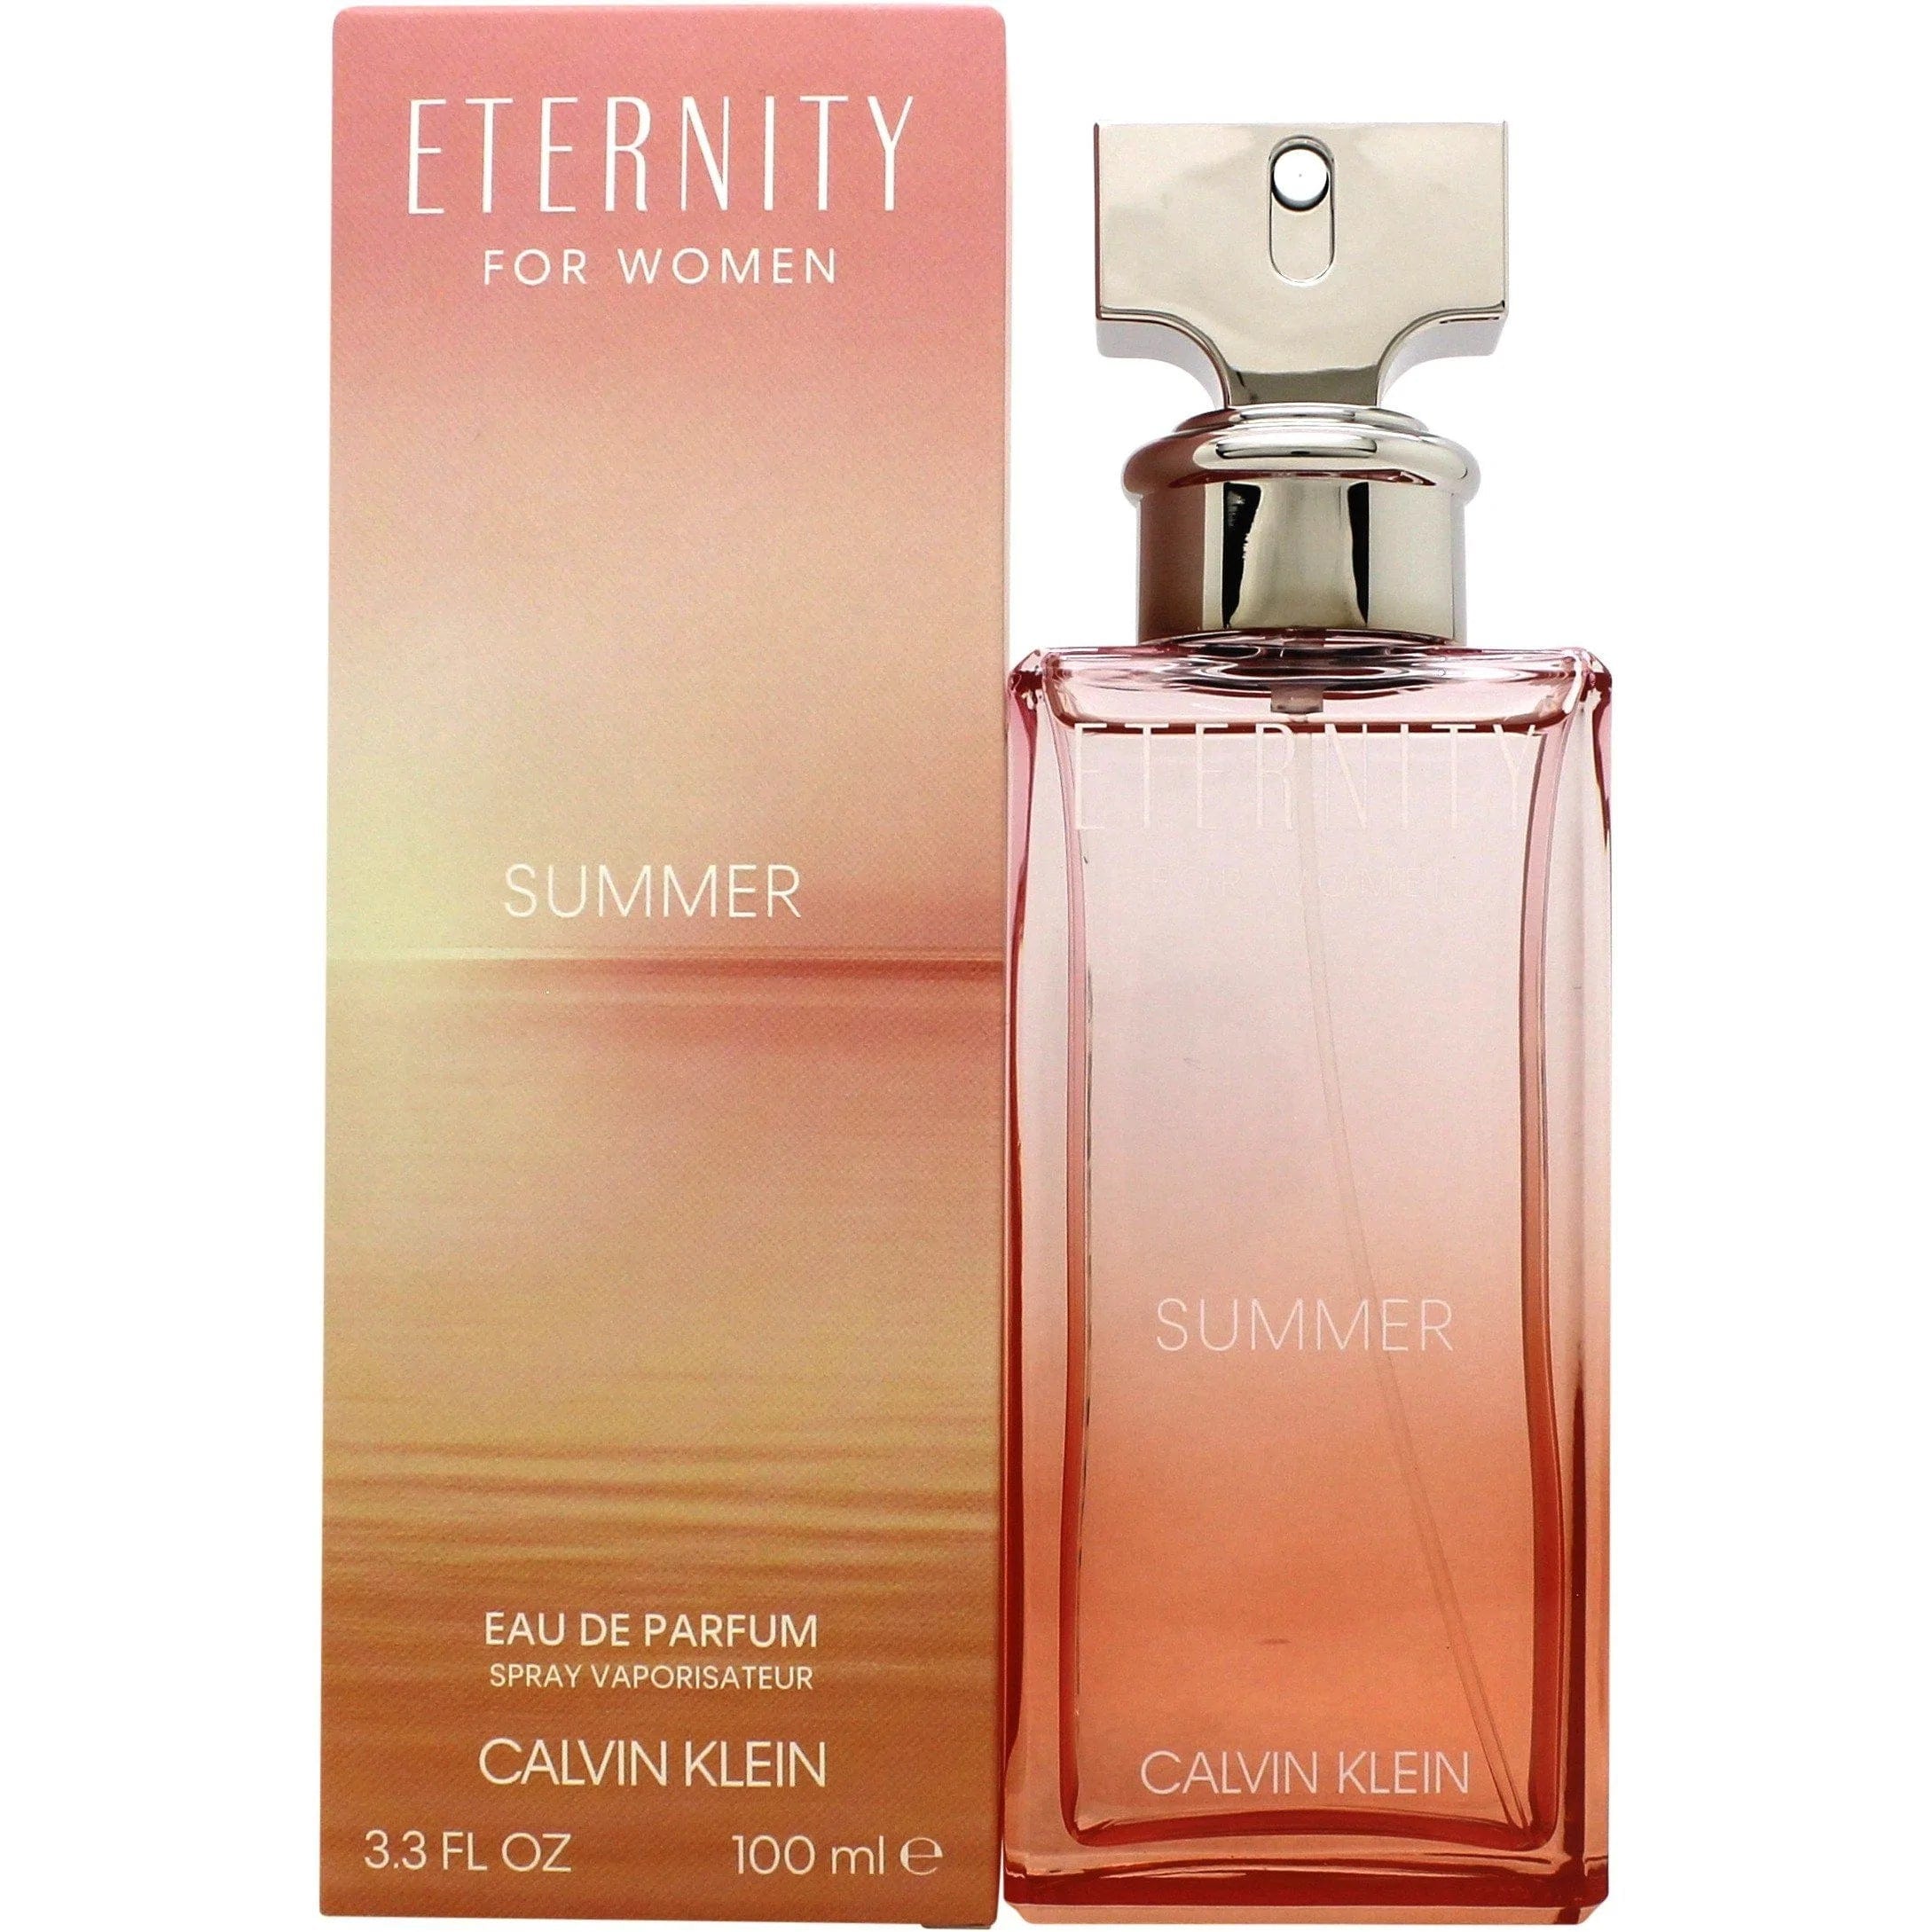 Calvin Klein Eternity Summer 2020 - Eau de Parfum, 100 ml